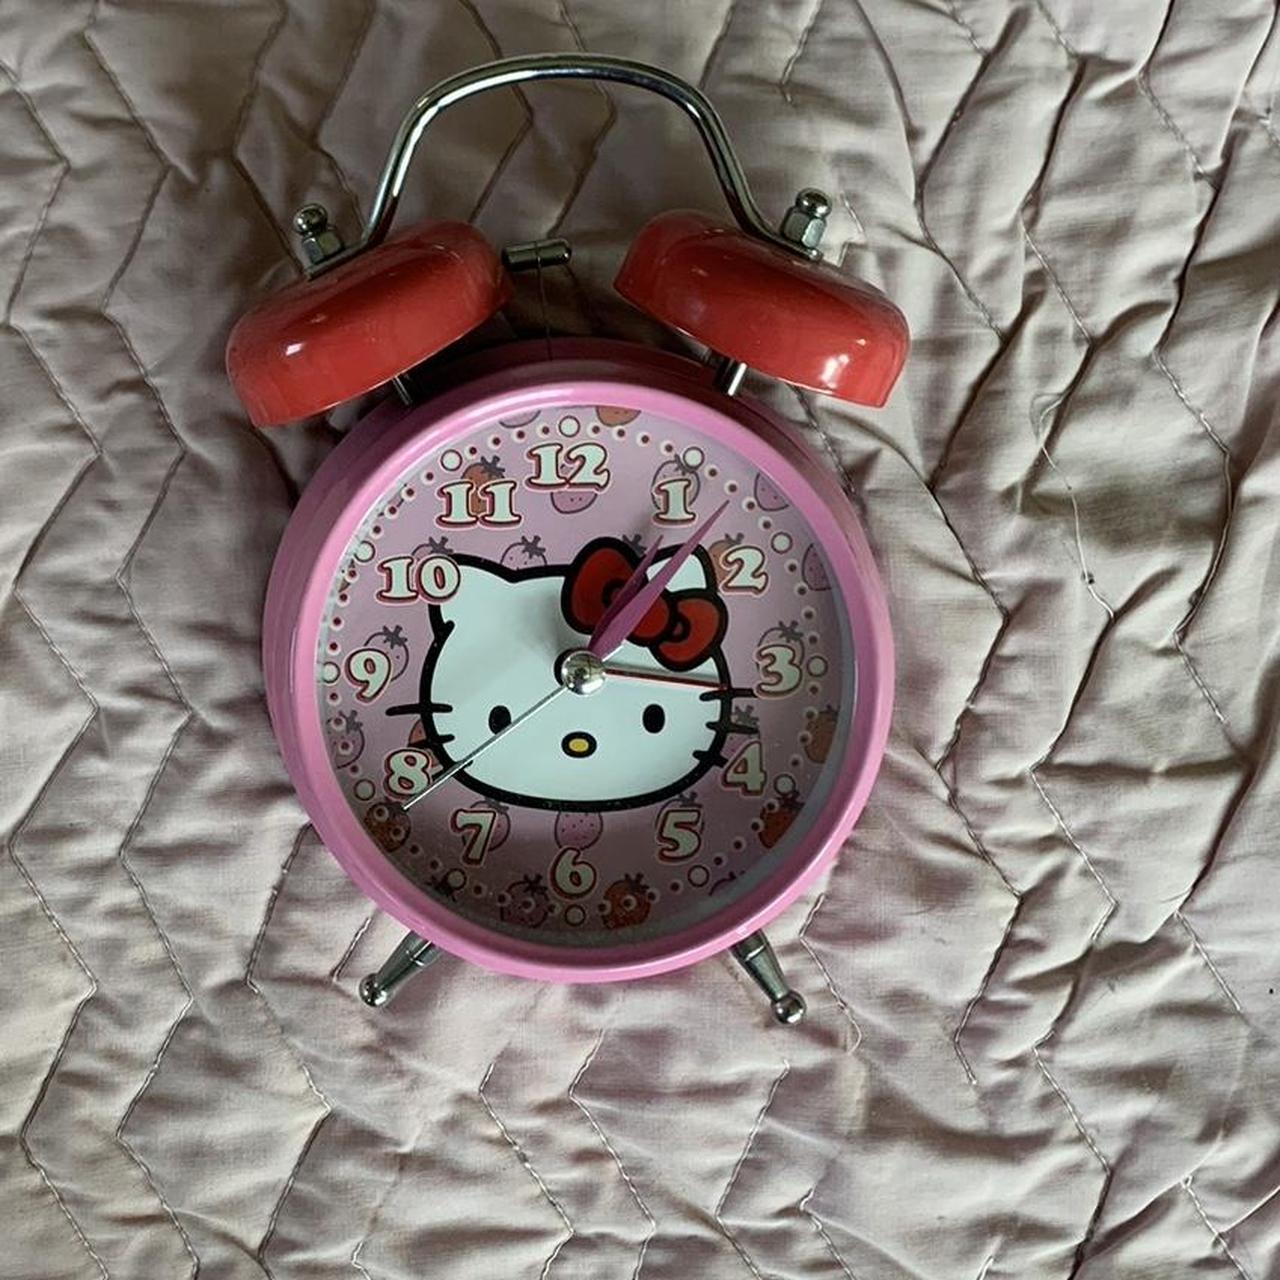 New Hello Kitty alarm clock looks cute, runs away to annoy you